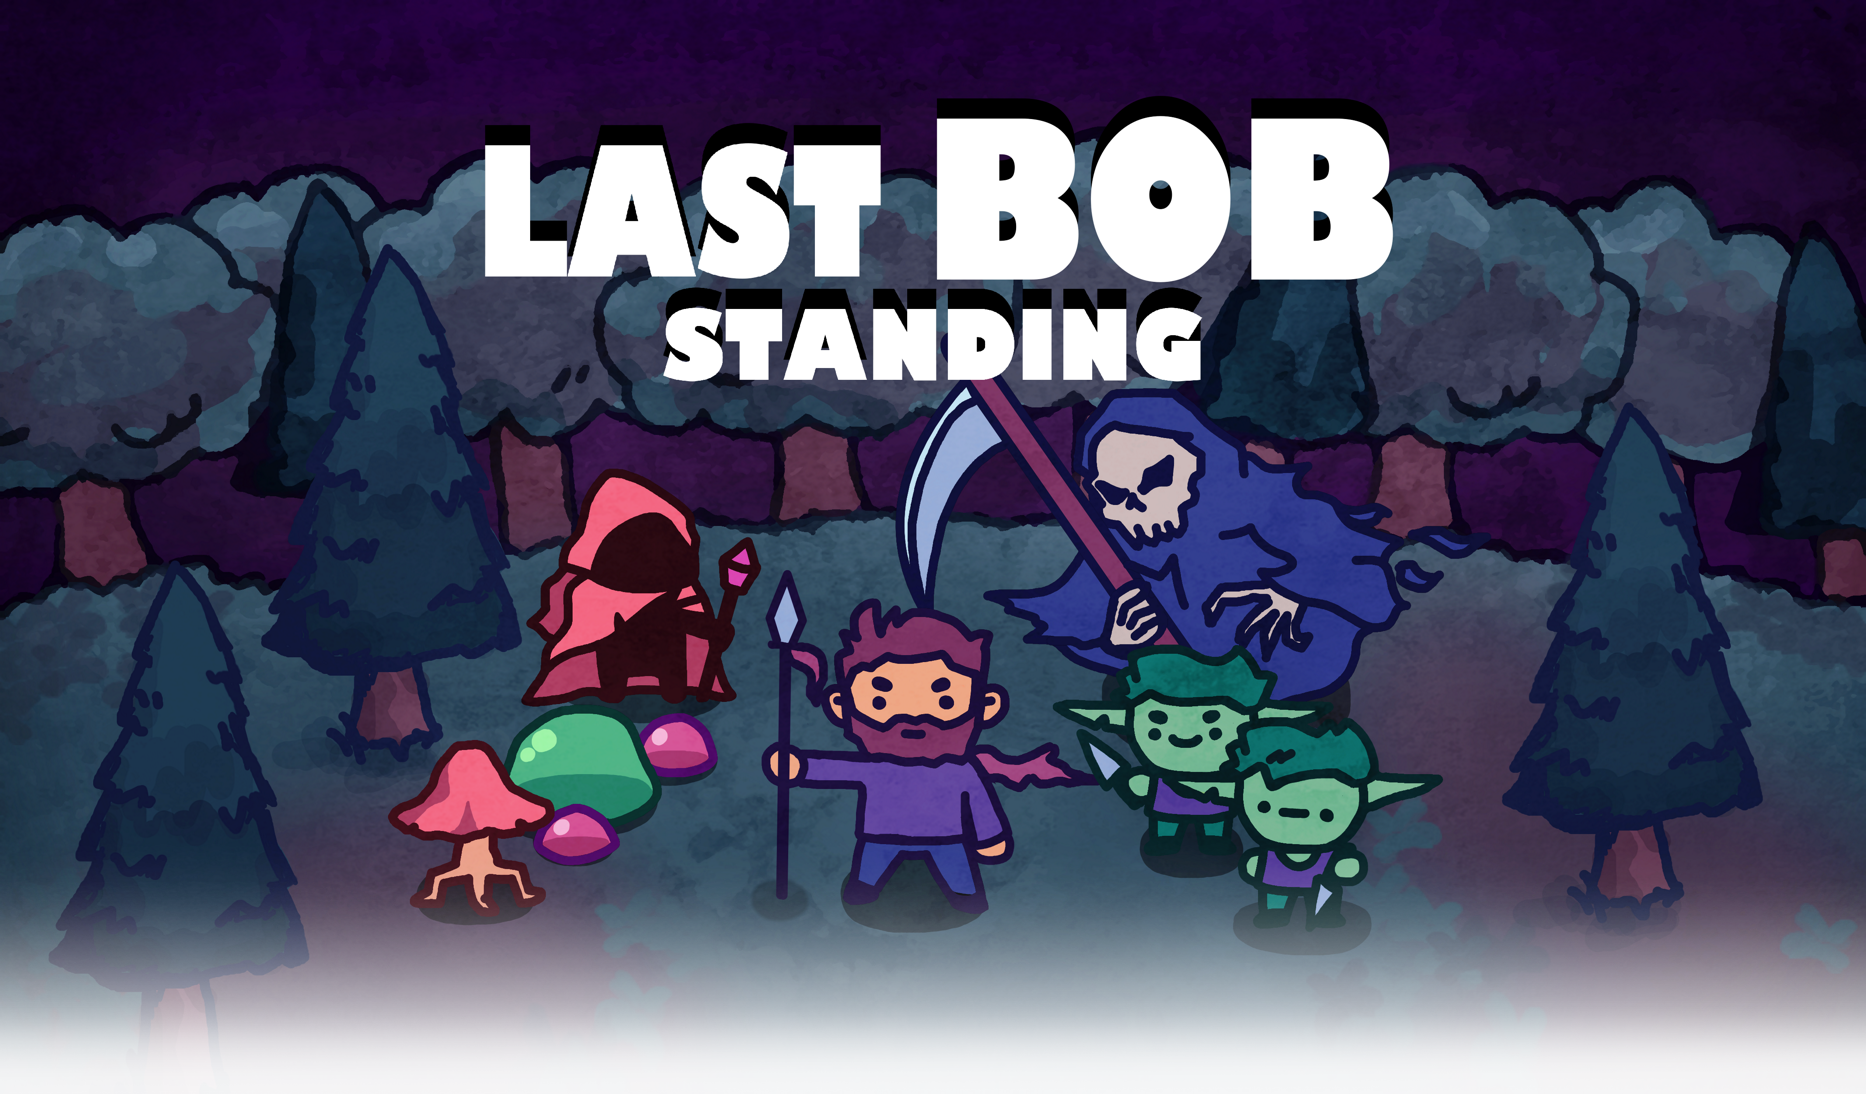 Last Bob standing